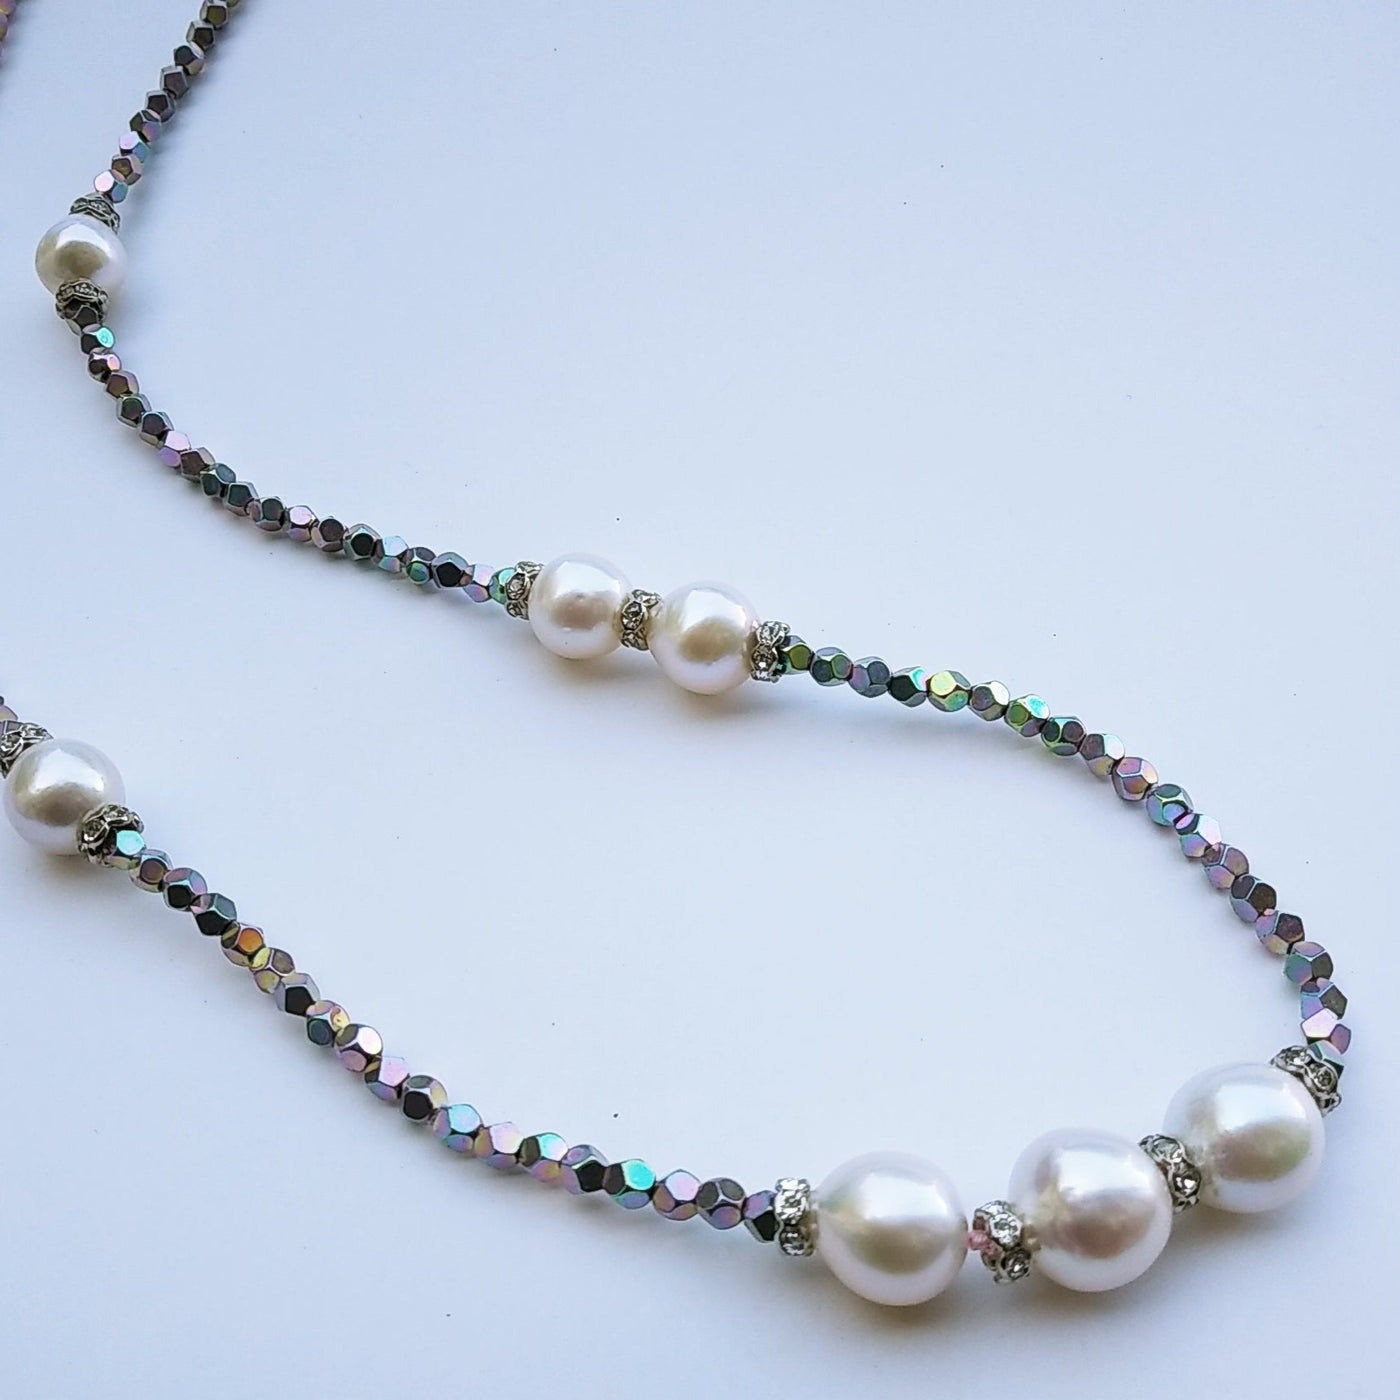 "Super-Sparkler" 30" Necklace - Pearl, Titanium Hematite, Crystal, Sterling